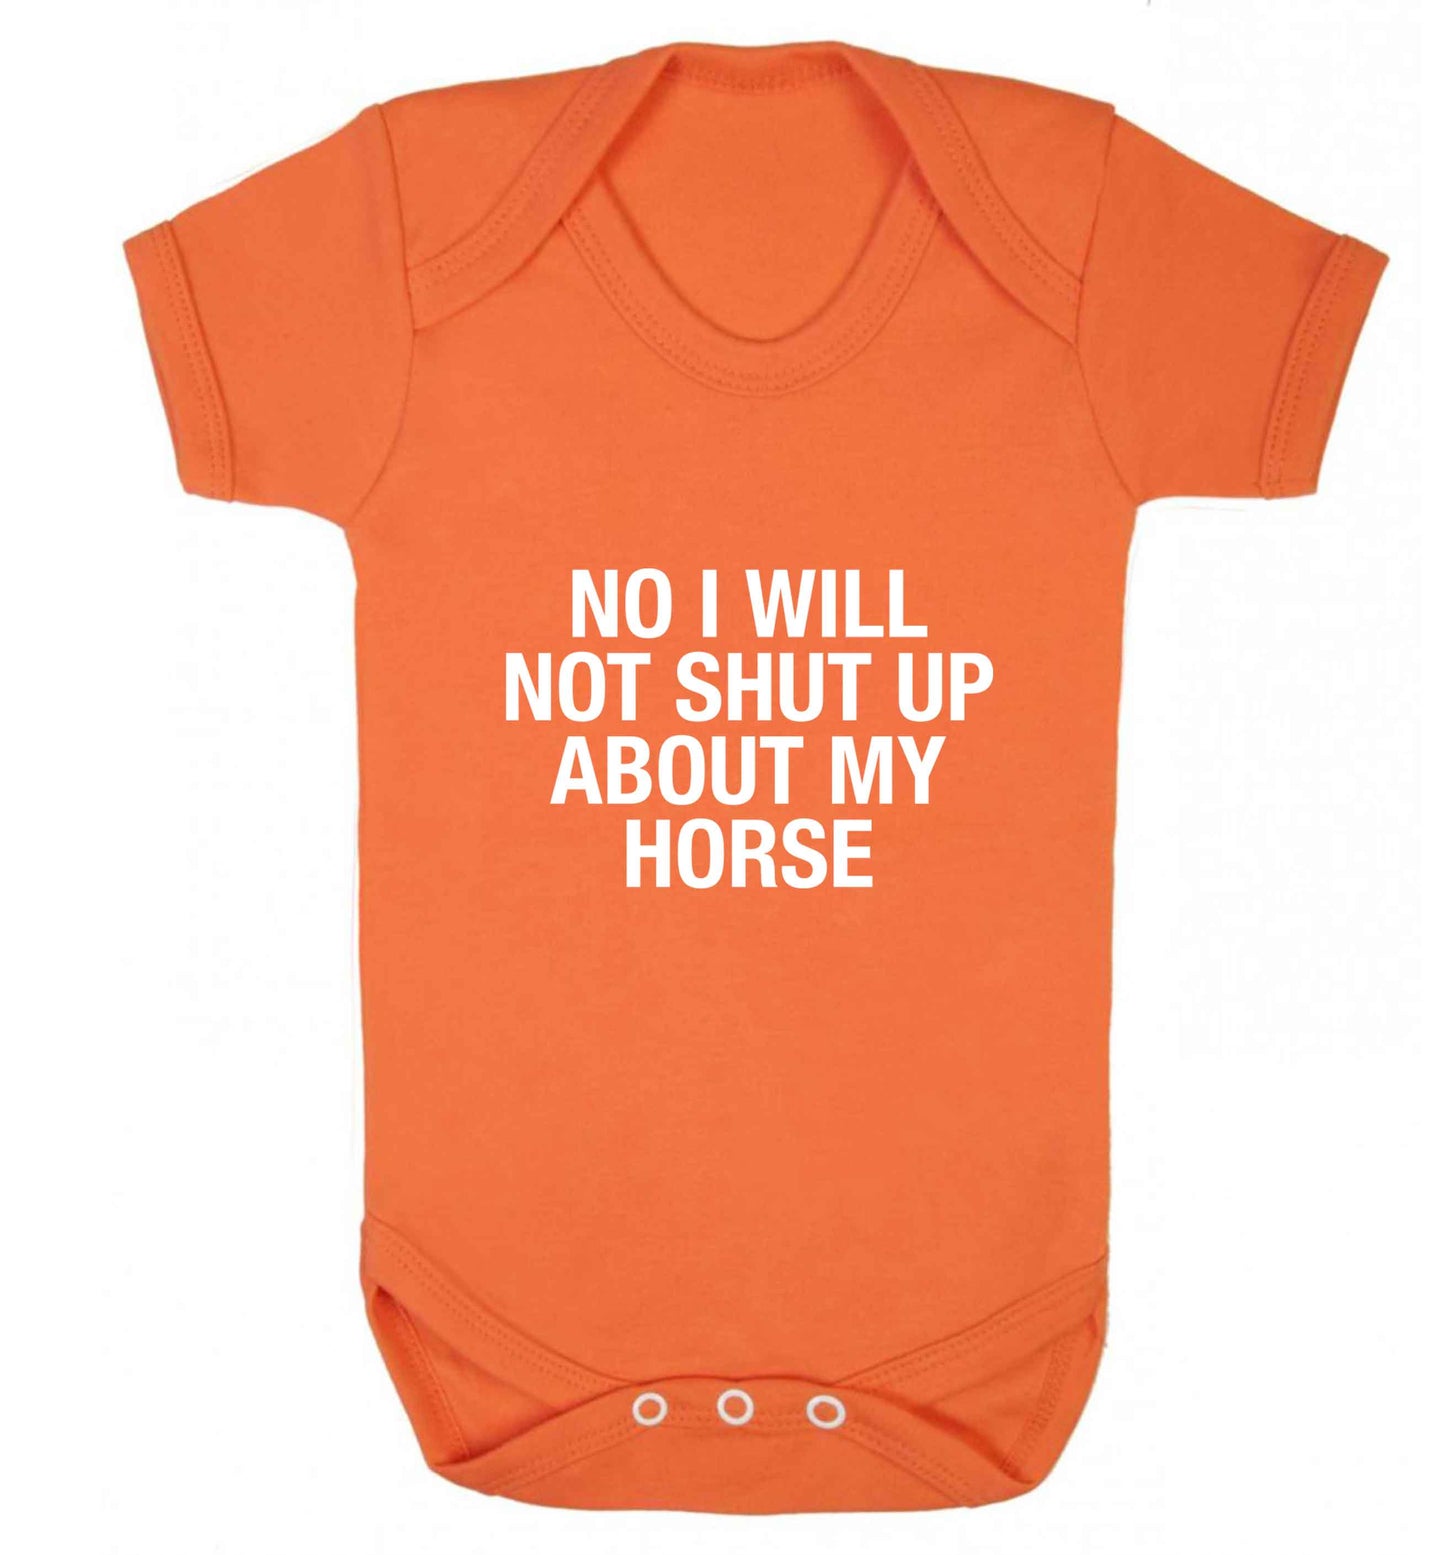 No I will not shut up talking about my horse baby vest orange 18-24 months